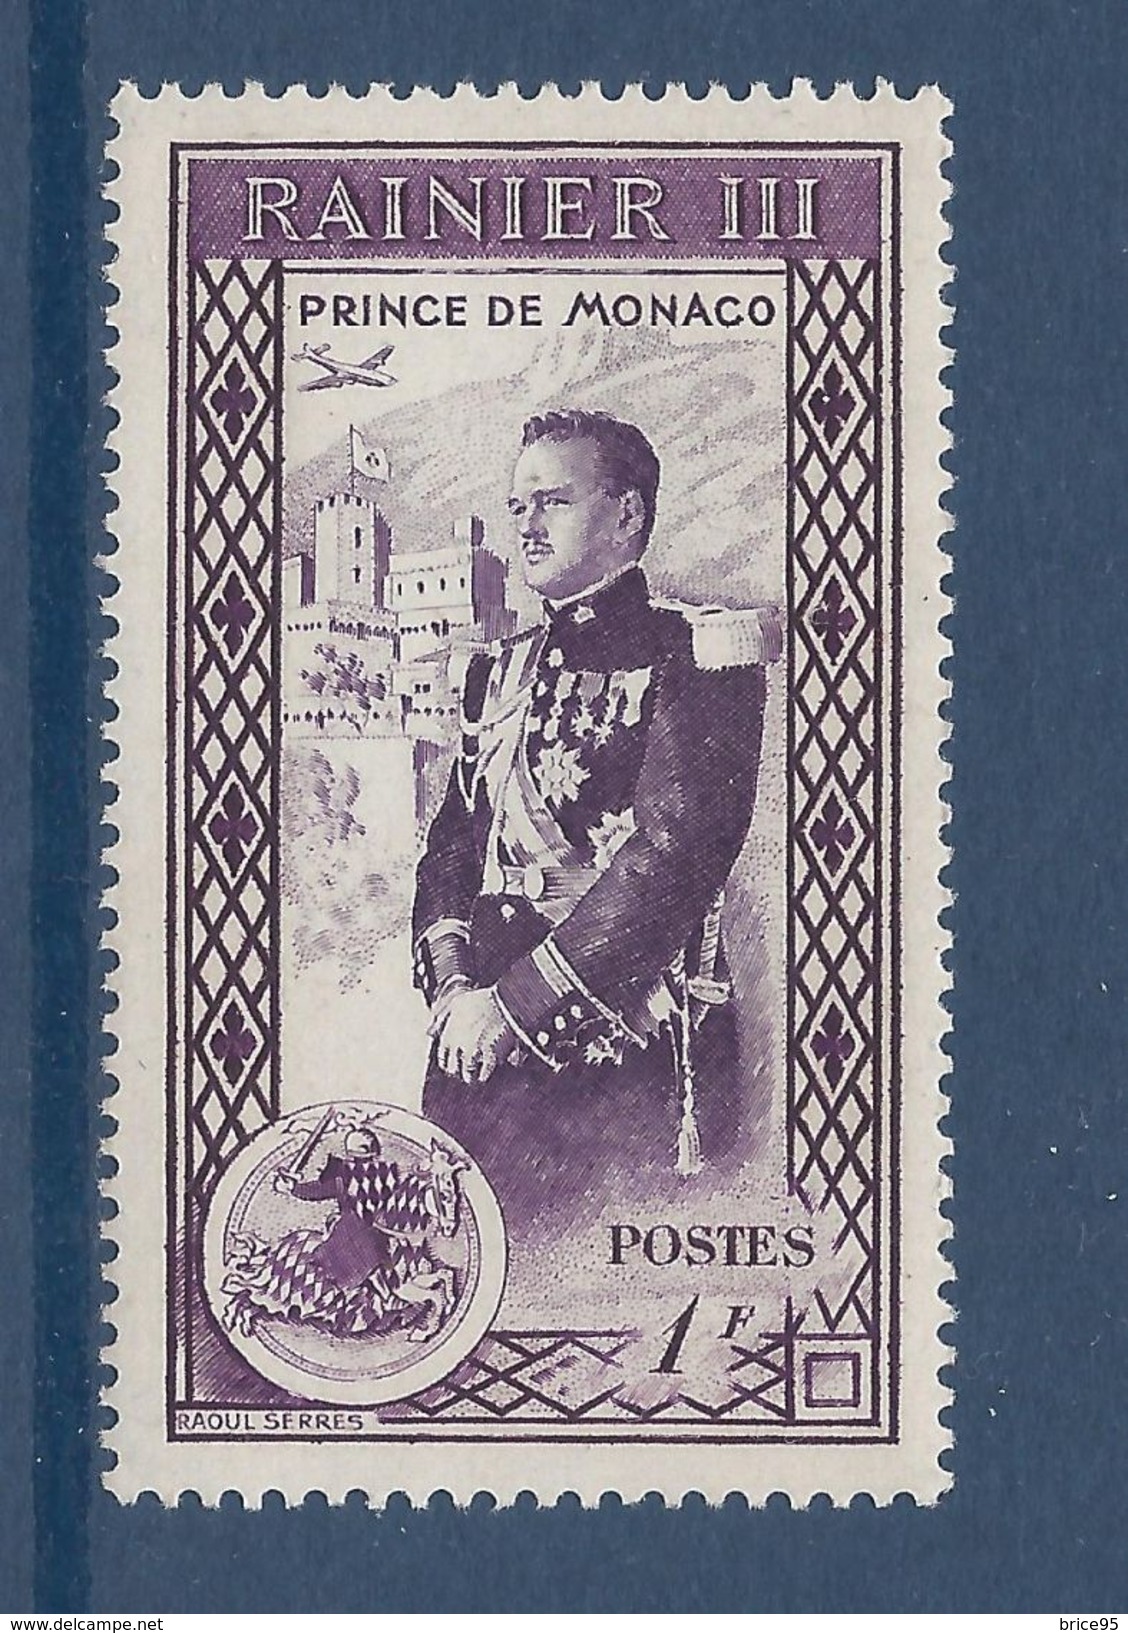 Monaco - YT N° 340 - Neuf Sans Charnière - 1950 - Nuevos